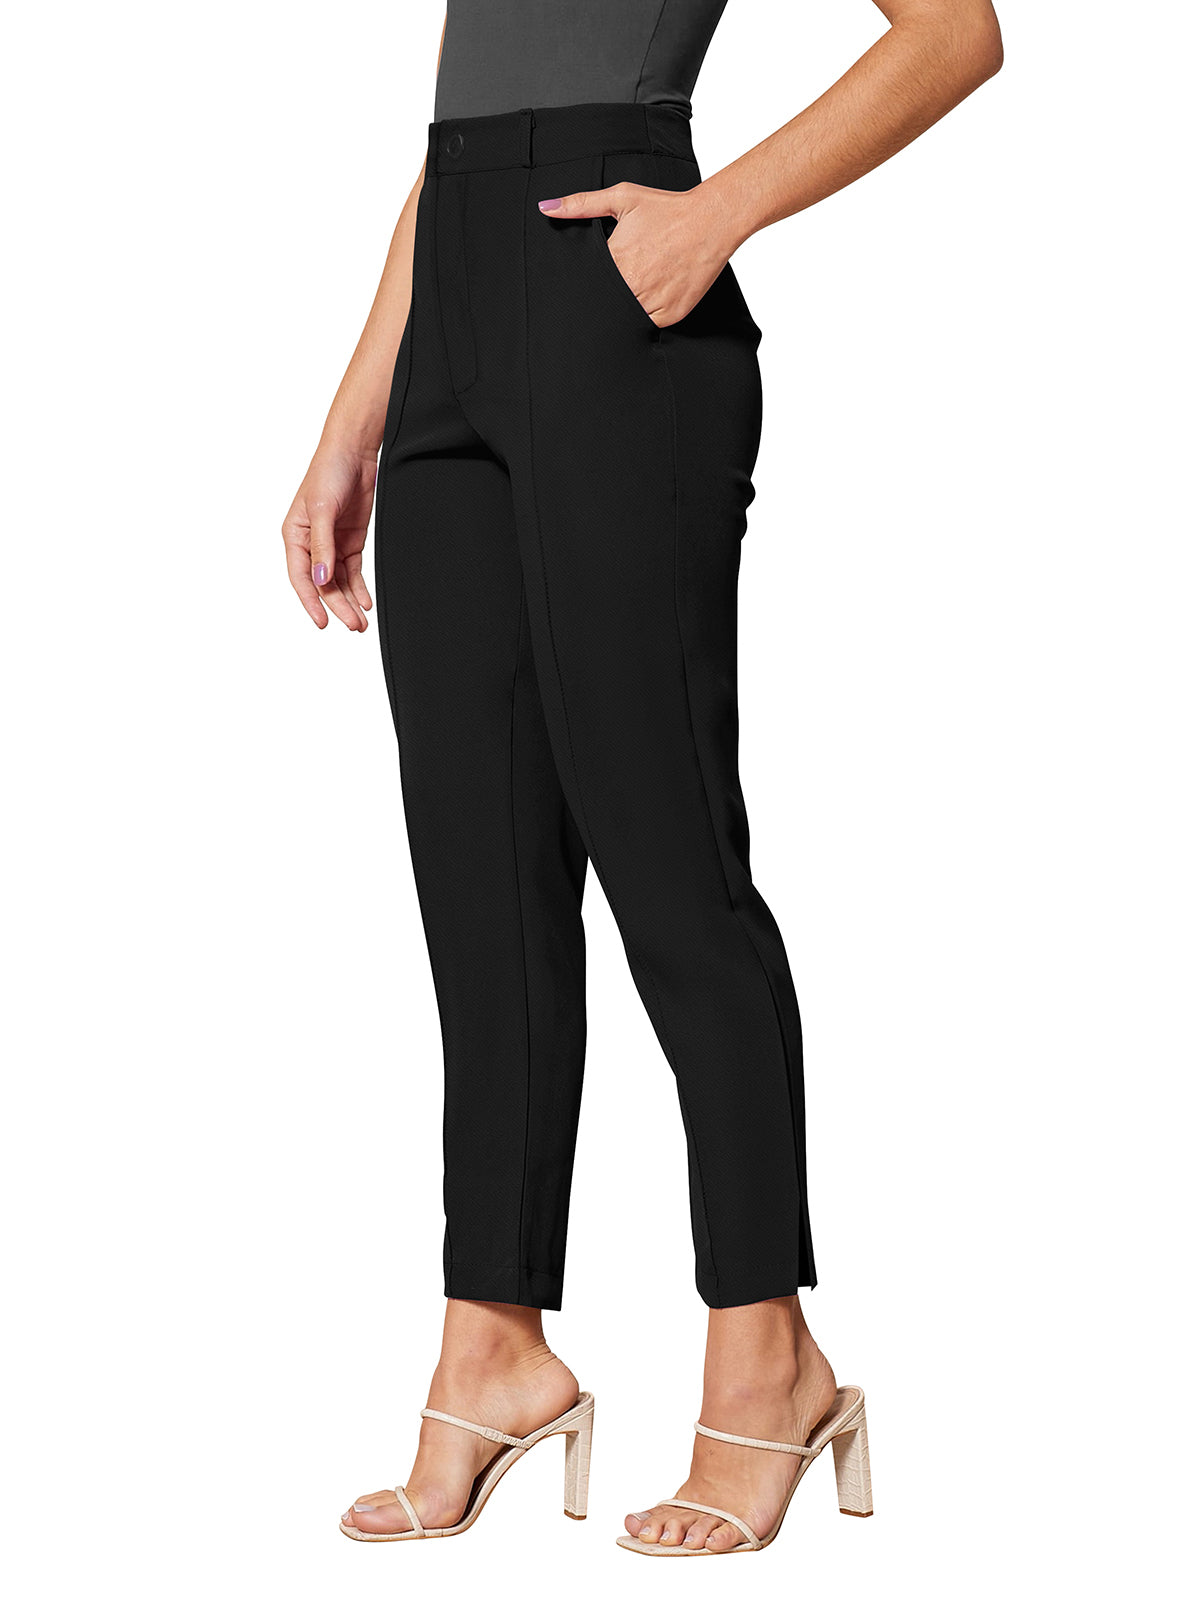 Odette Black Polyester Solid Trouser For Women